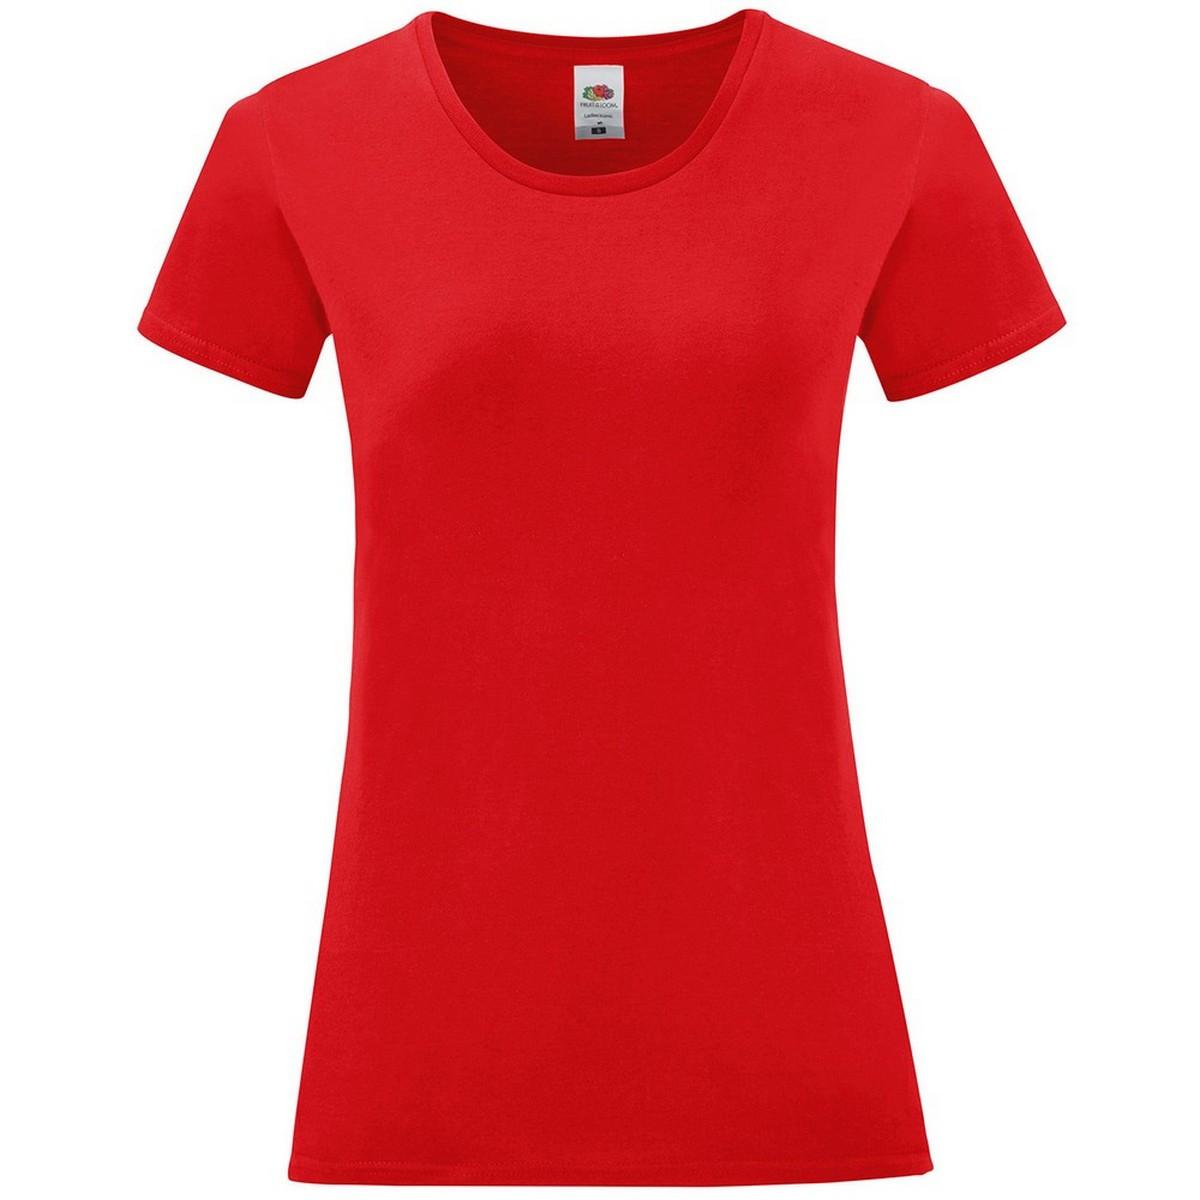 Iconic Tshirt Damen Rot Bunt L von Fruit of the Loom